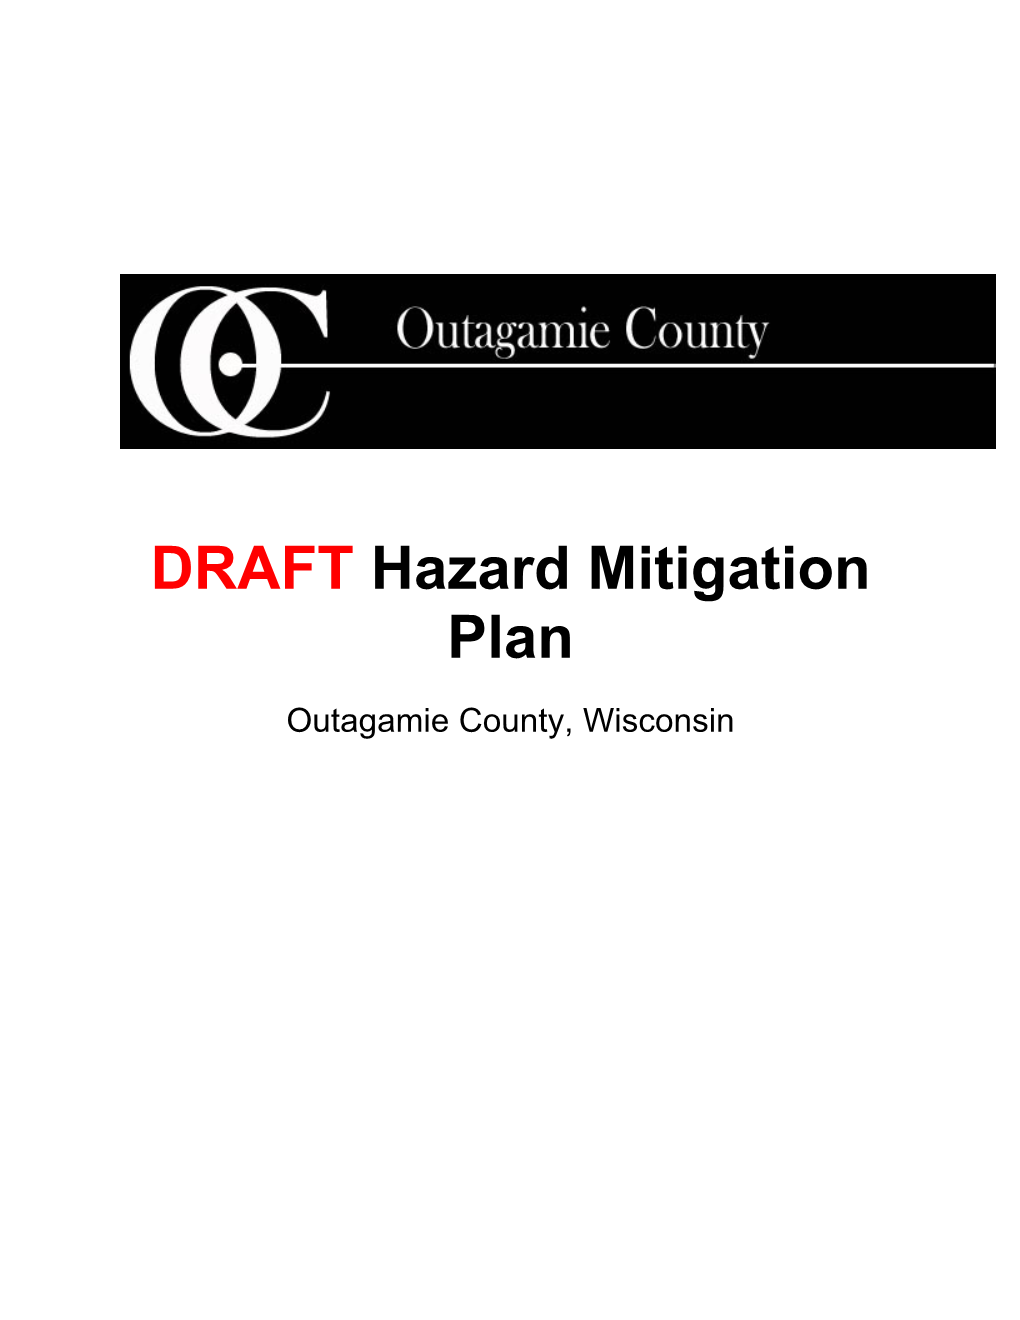 DRAFT Hazard Mitigation Plan